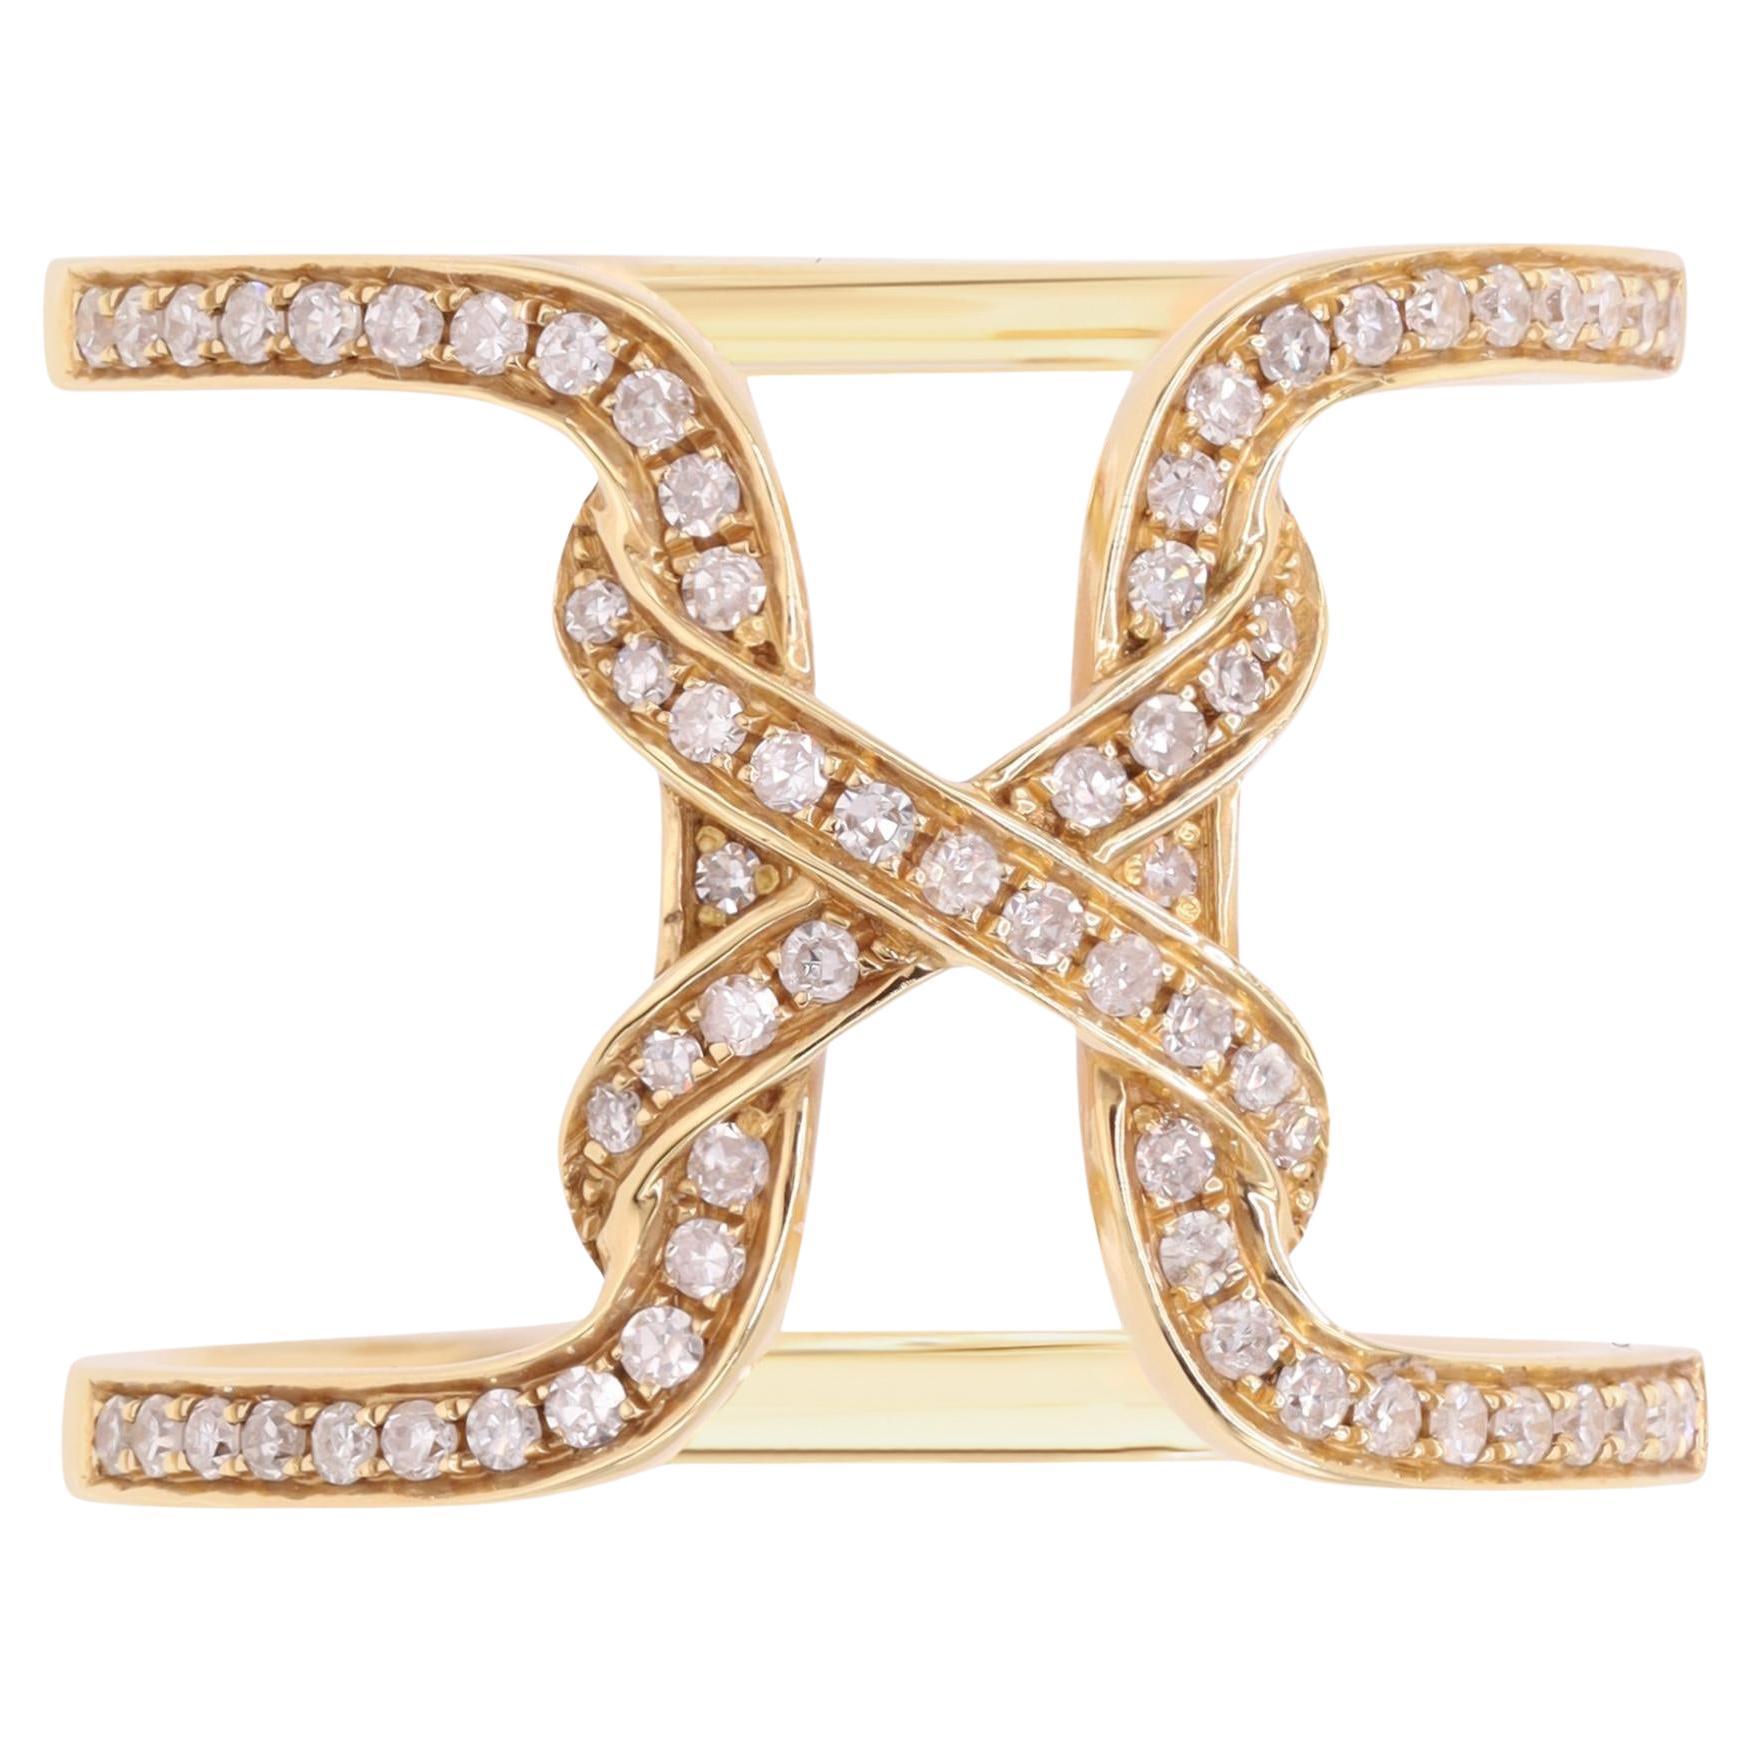 Rachel Koen Diamond Fancy Wide Open Statement Ring 18K Yellow Gold 0.31cttw For Sale